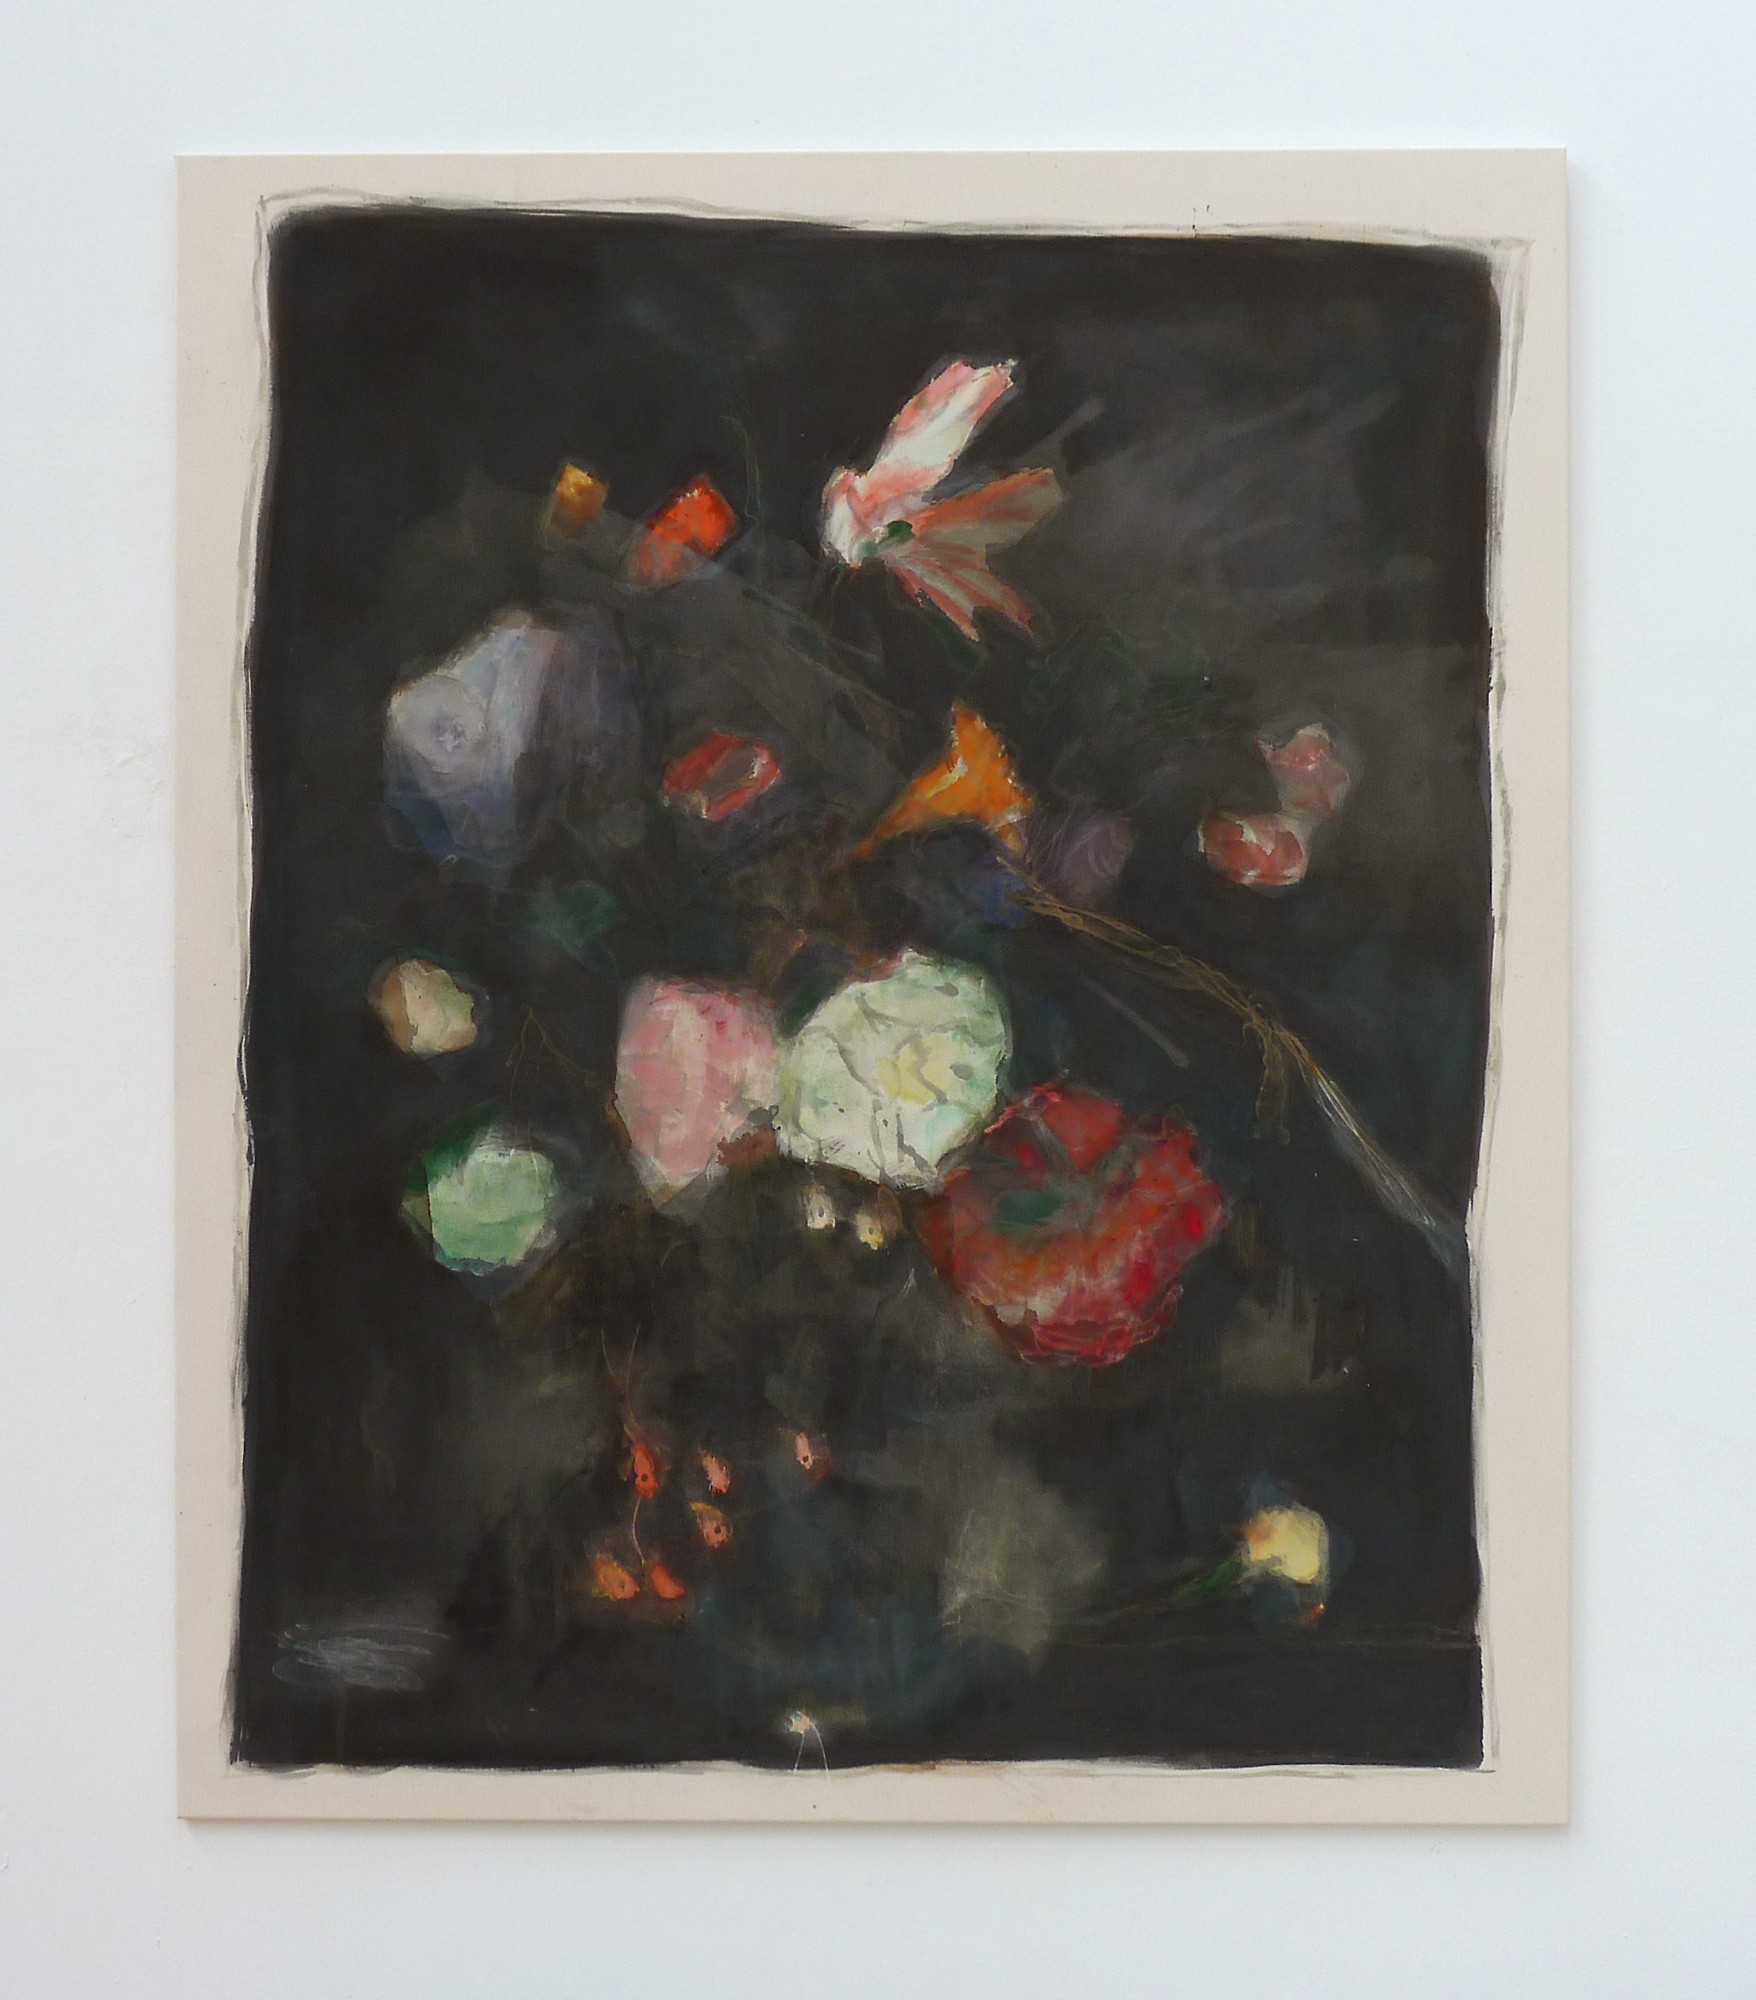 Erwin Gross, Blumenbild, 2011, acrylic, pigment on canvas, 240 x 200 cm,